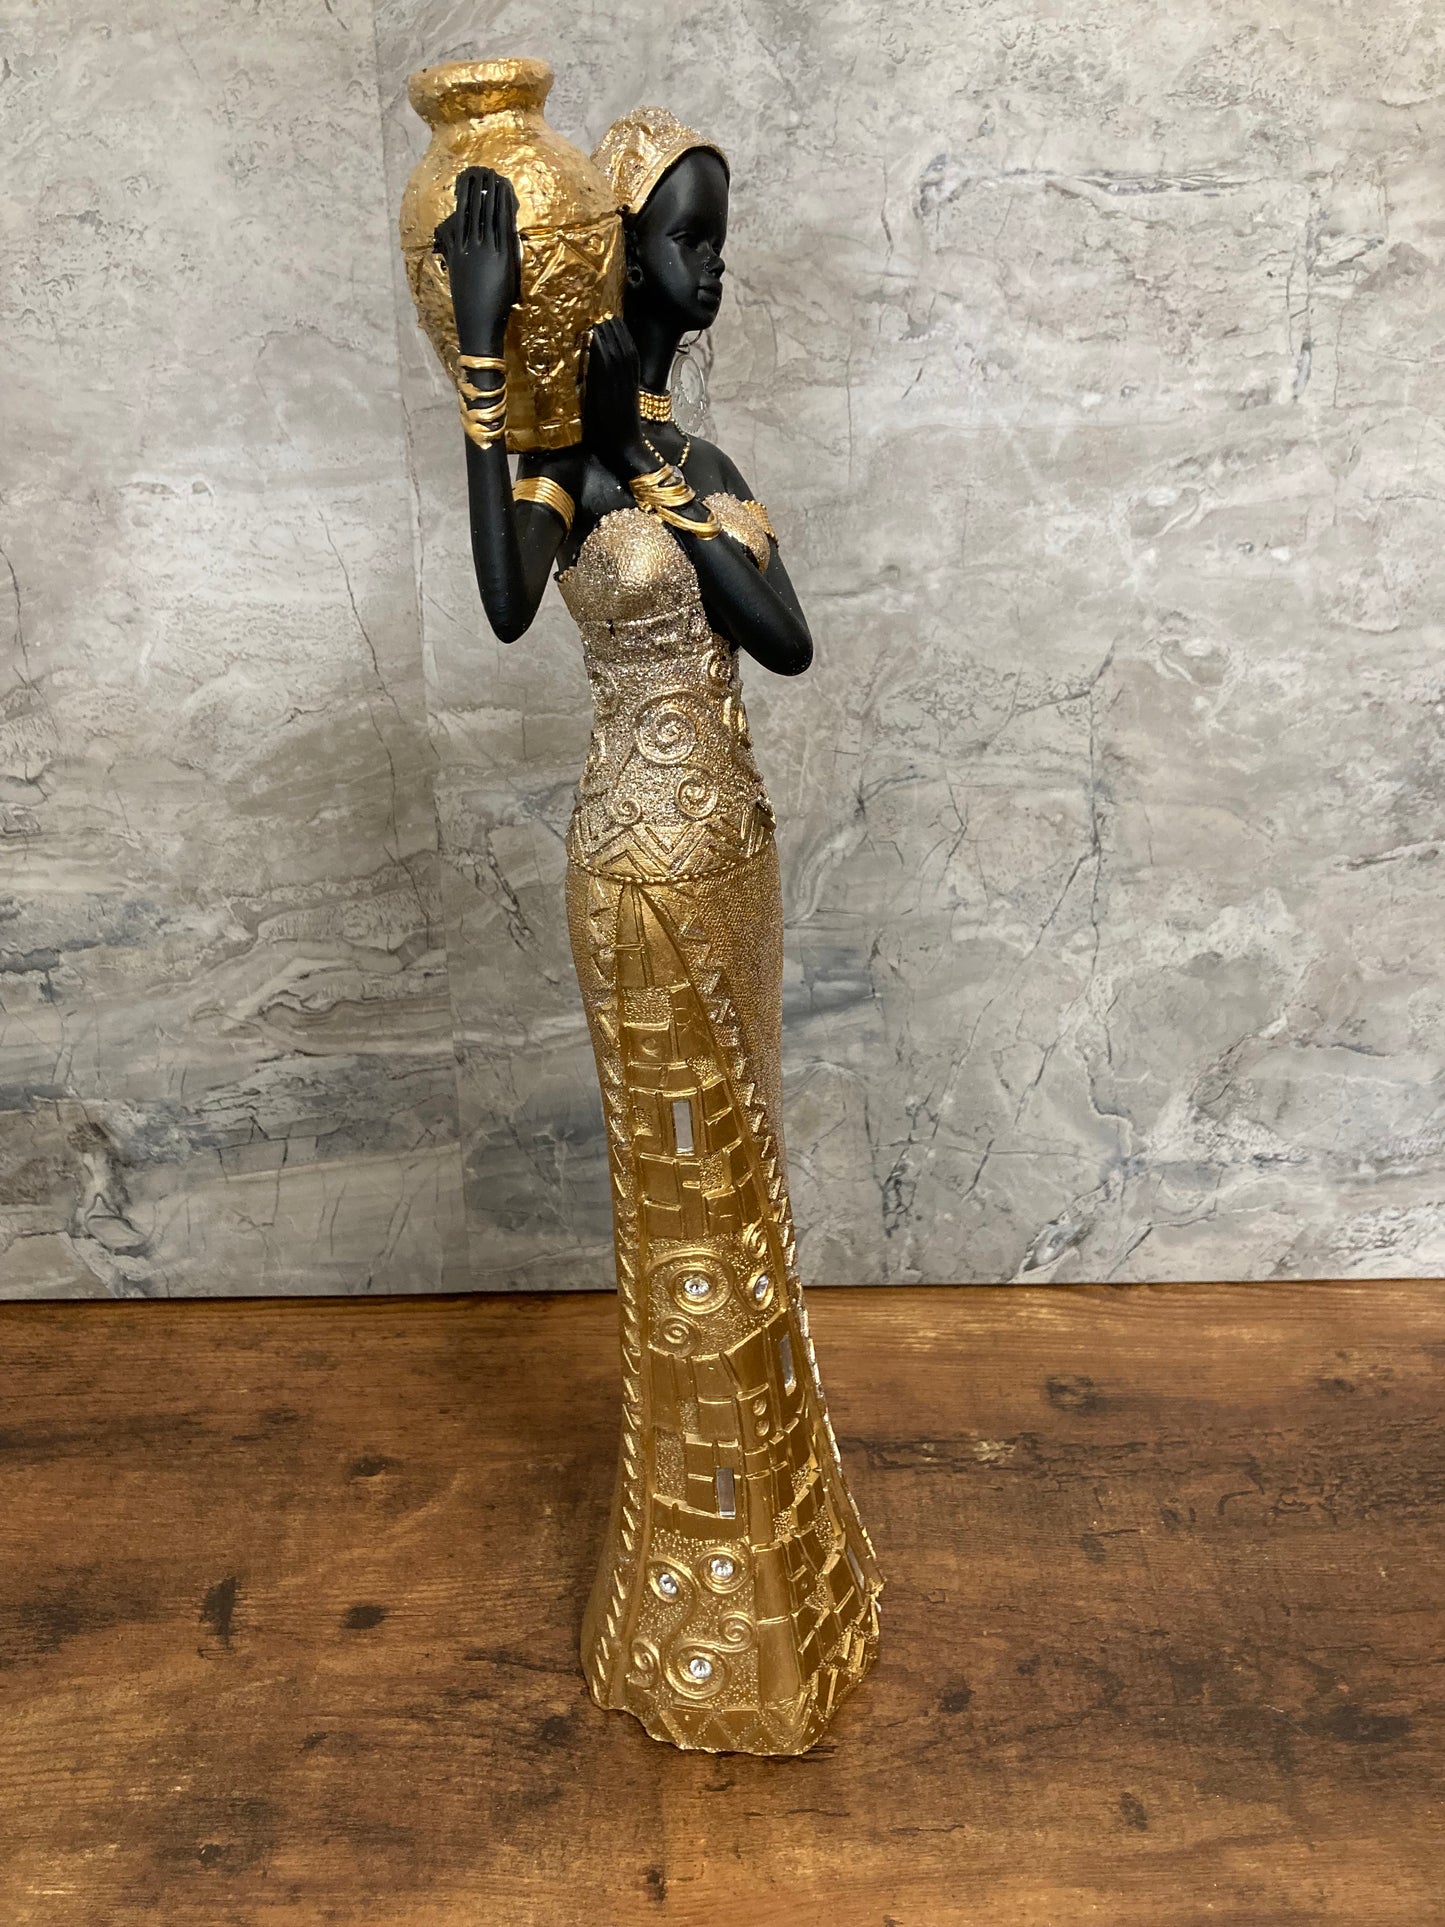 African American Lady statute figurine Gold glitter color Elegant Home decor.